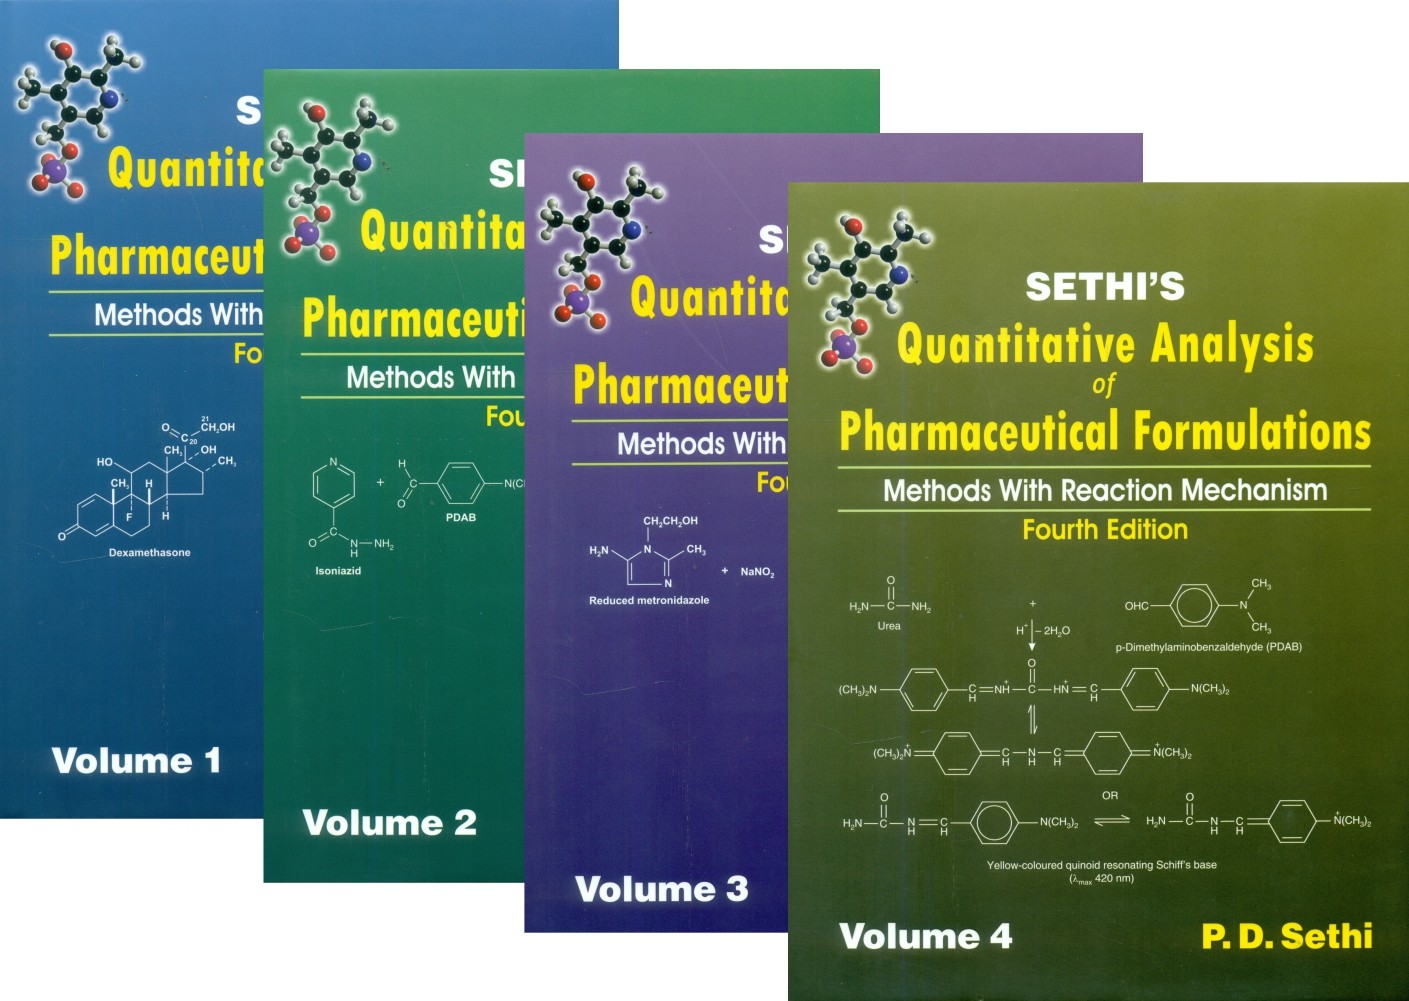 Sethi's Quantitative Analysis Of Pharmaceutical Formulations Methods With Reaction Mechanism 4Ed 4 Vol. Set (Hb)